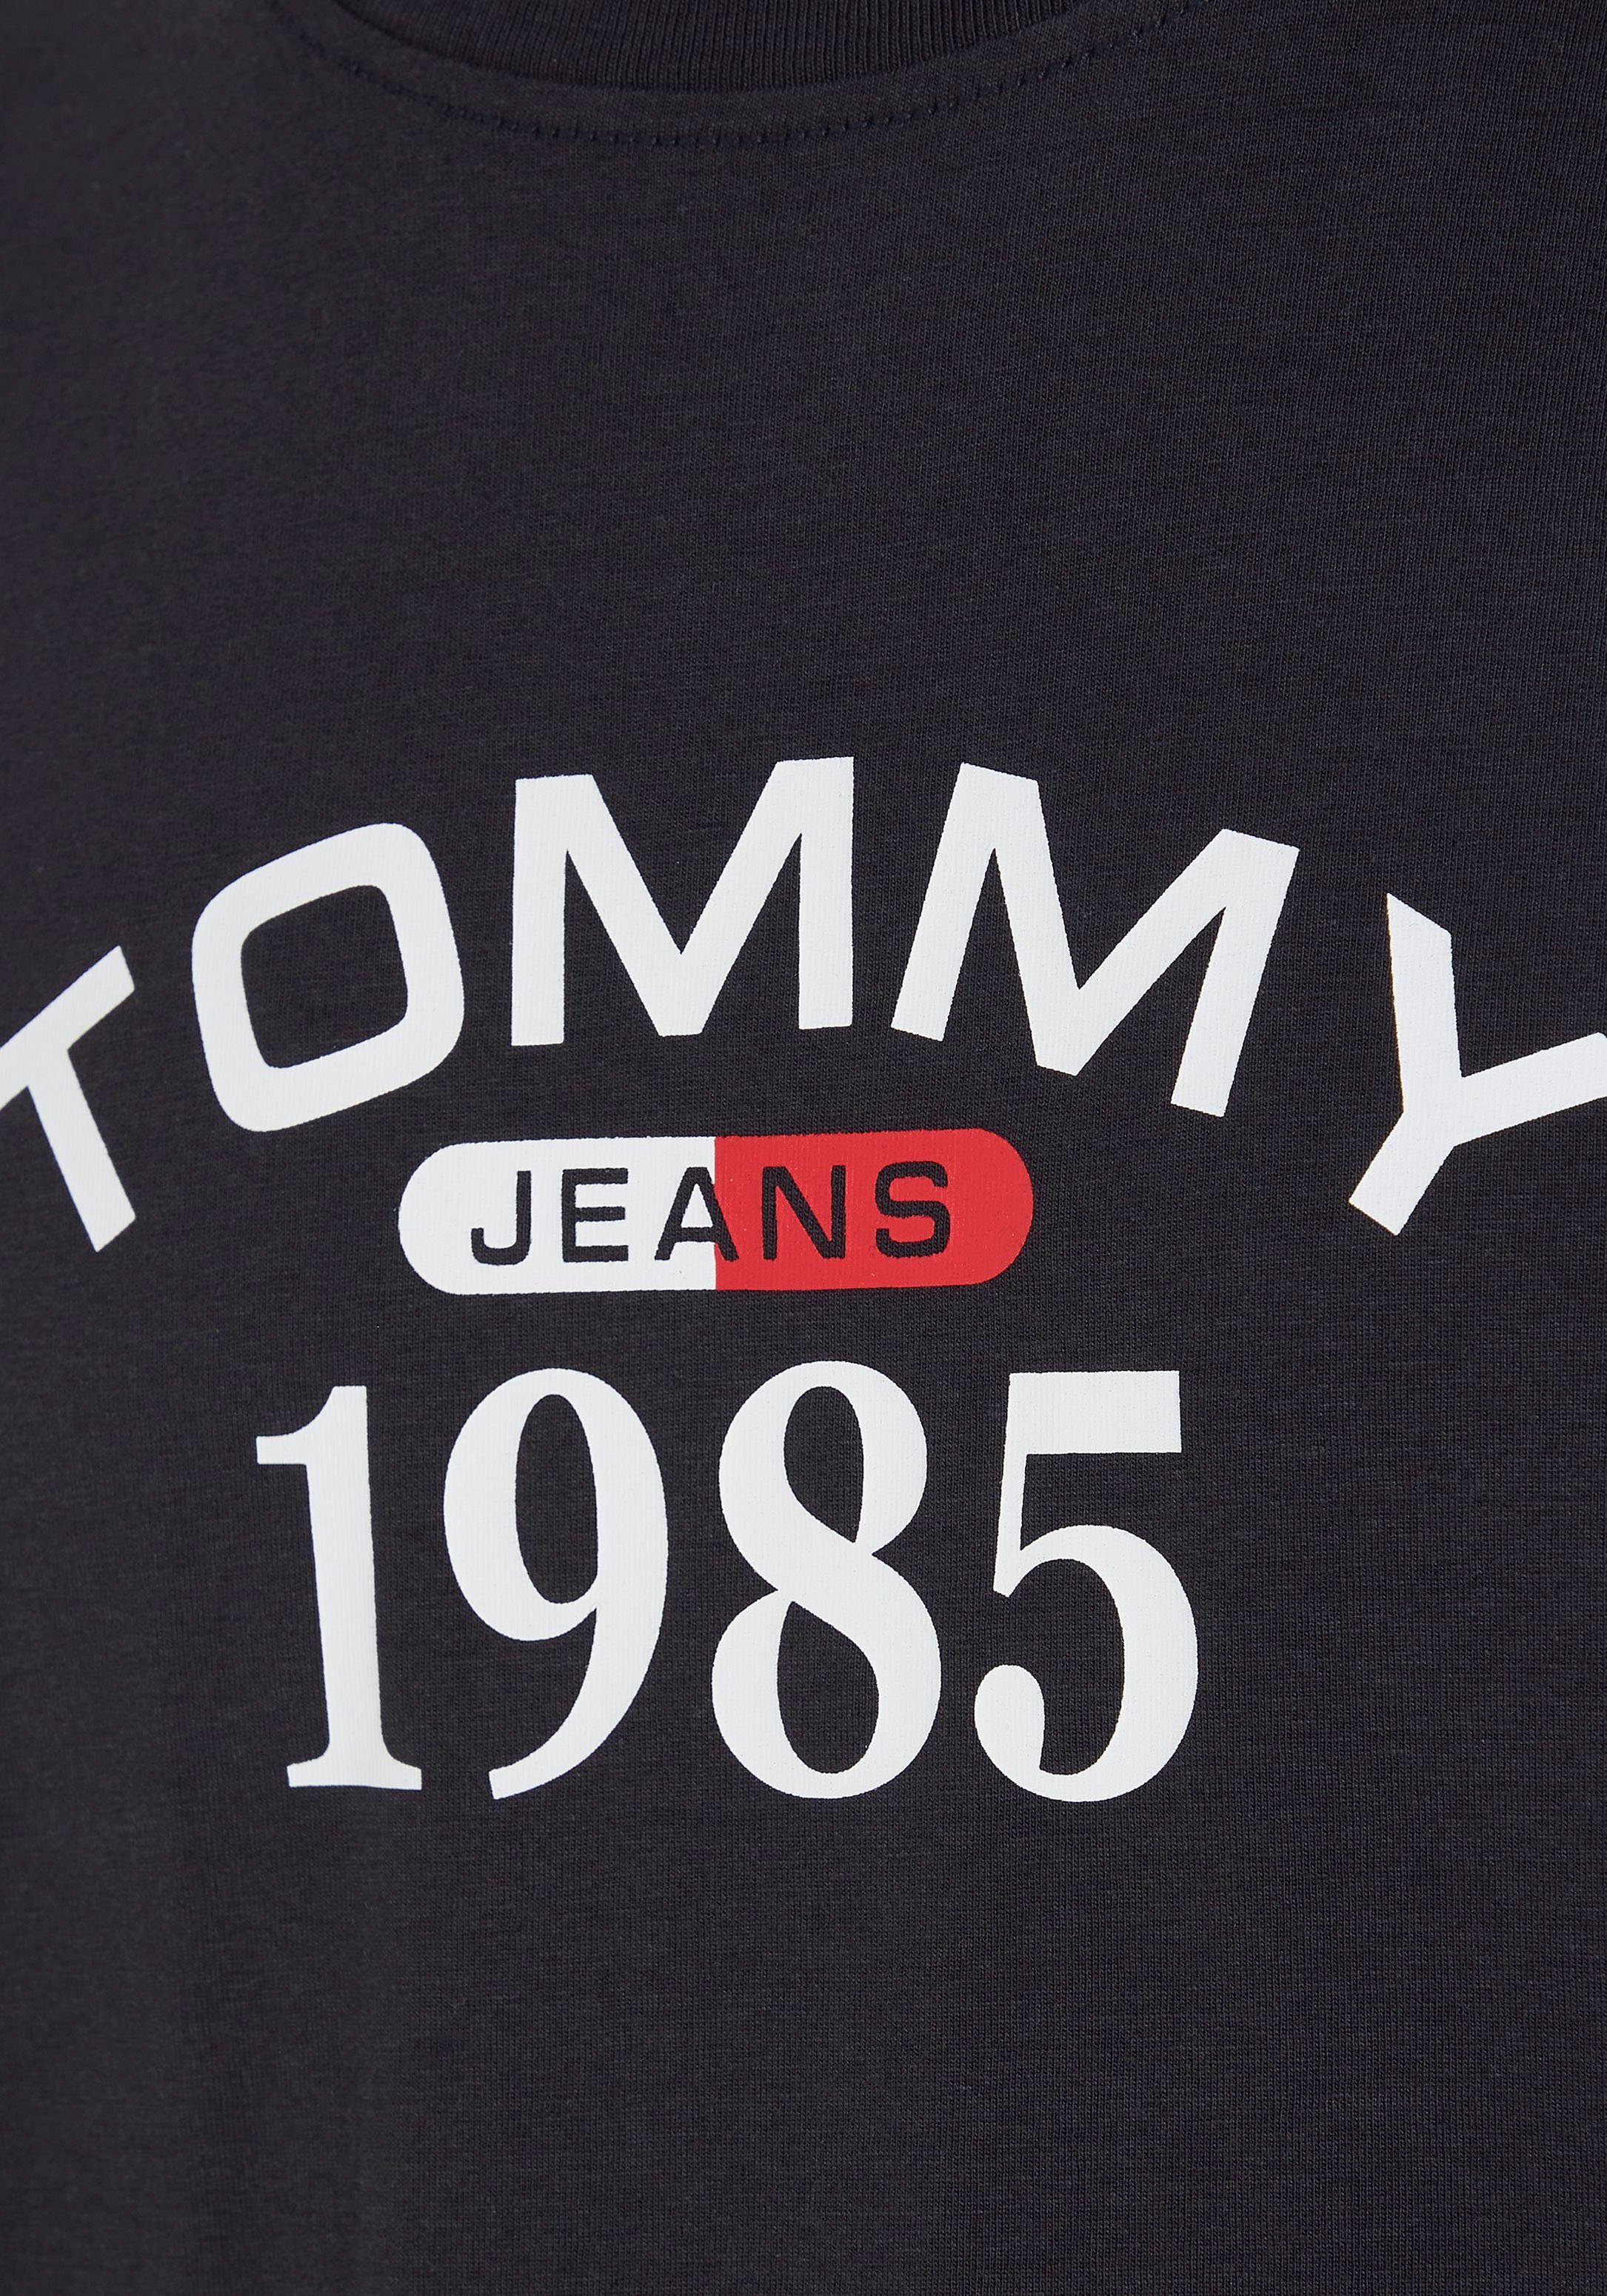 Tommy Jeans T-Shirt TJM Desert RWB CURVED Sky TEE 1985 CLSC